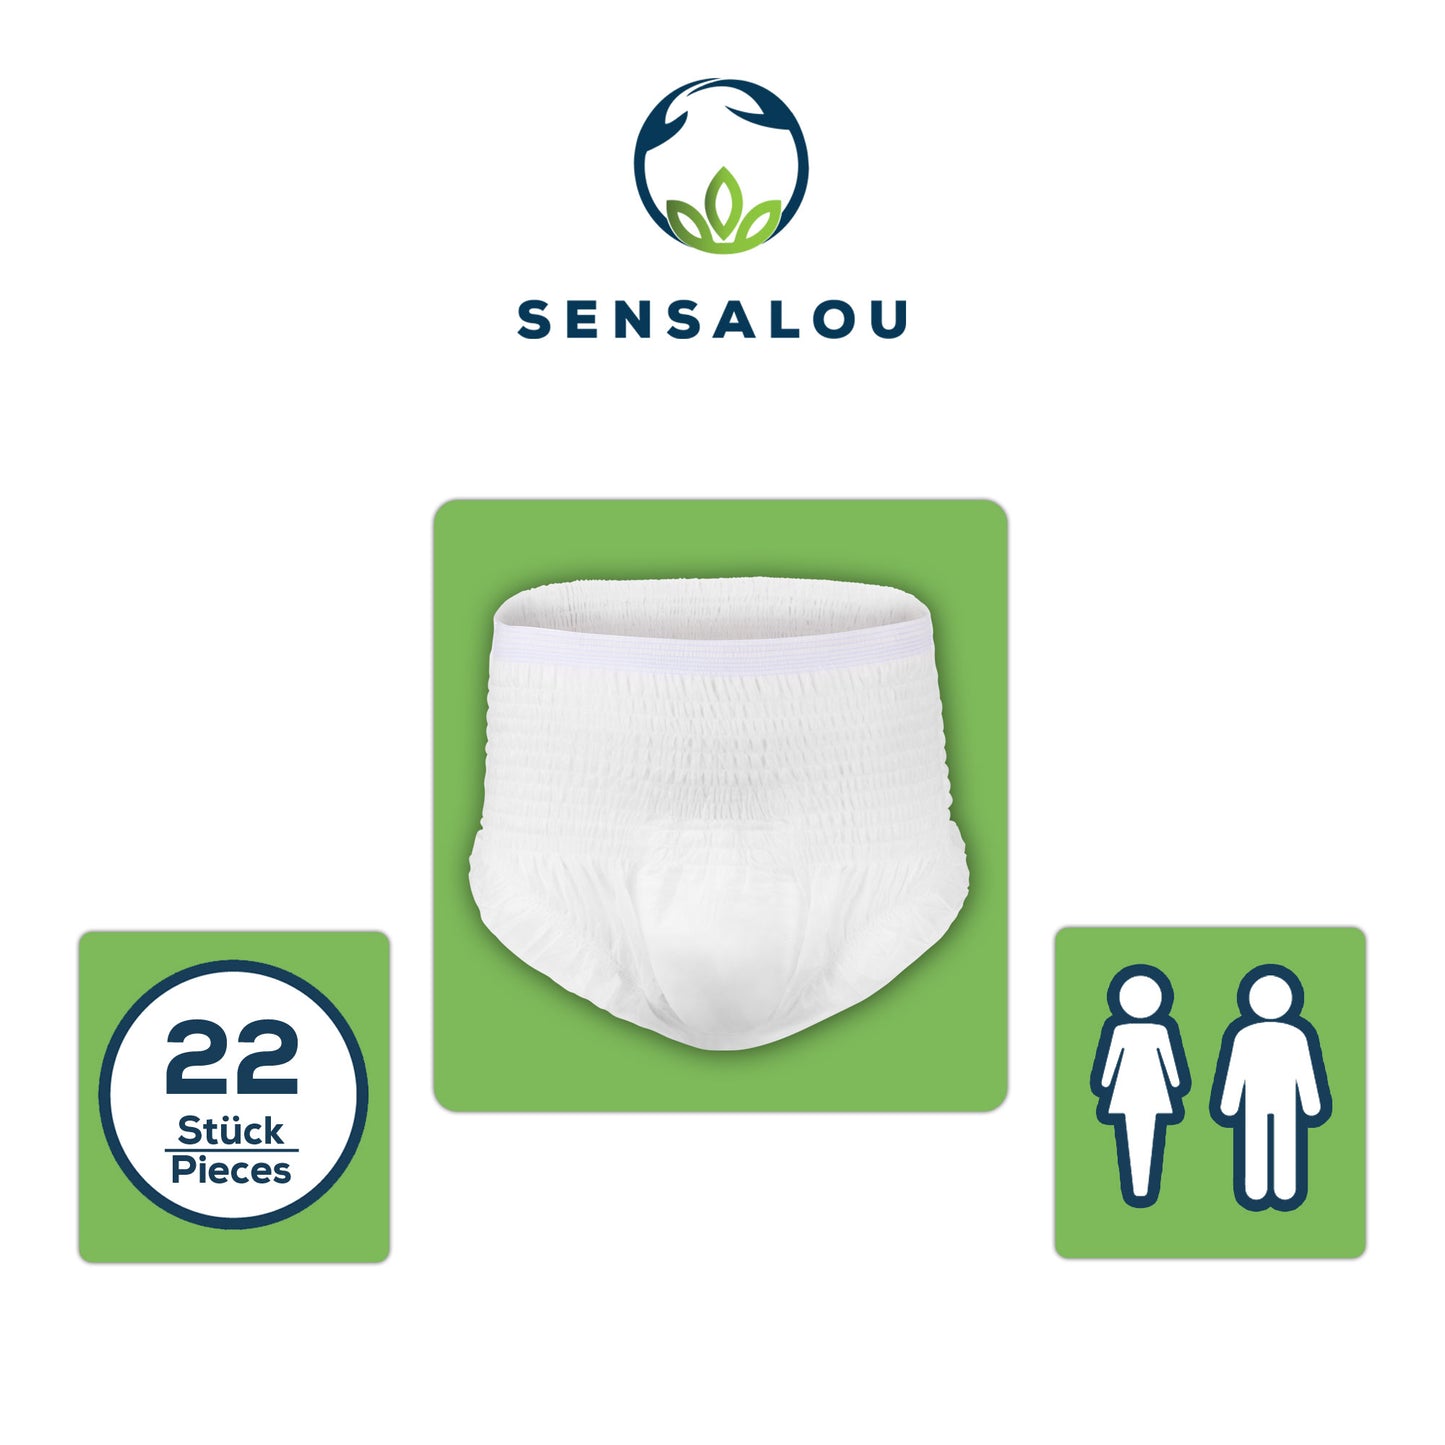 Sensalou Pants Maxi - Size XL